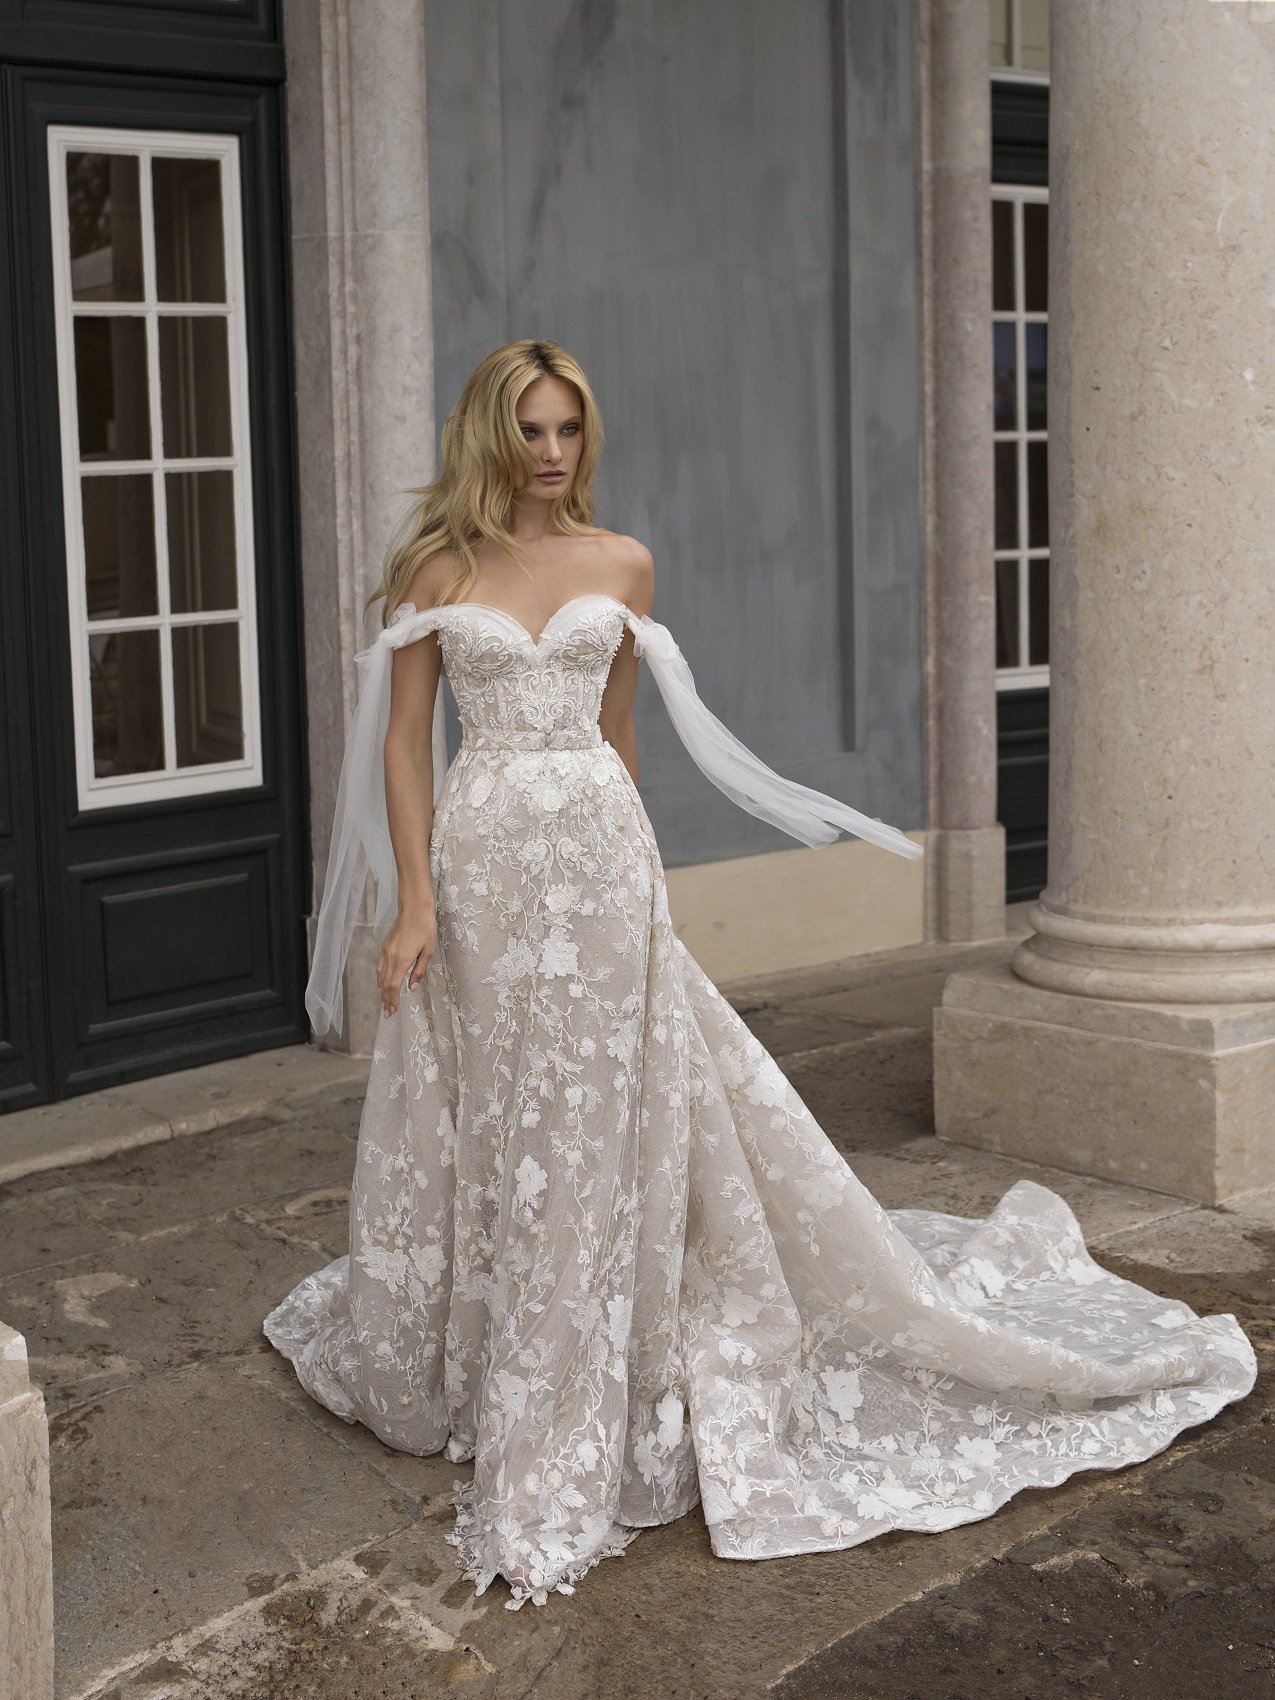 blanc-de-blanc-bridal-boutique-pittsburgh-cleveland-dress-wedding-gown-EVA-LENDEL-Carrera-.jpeg